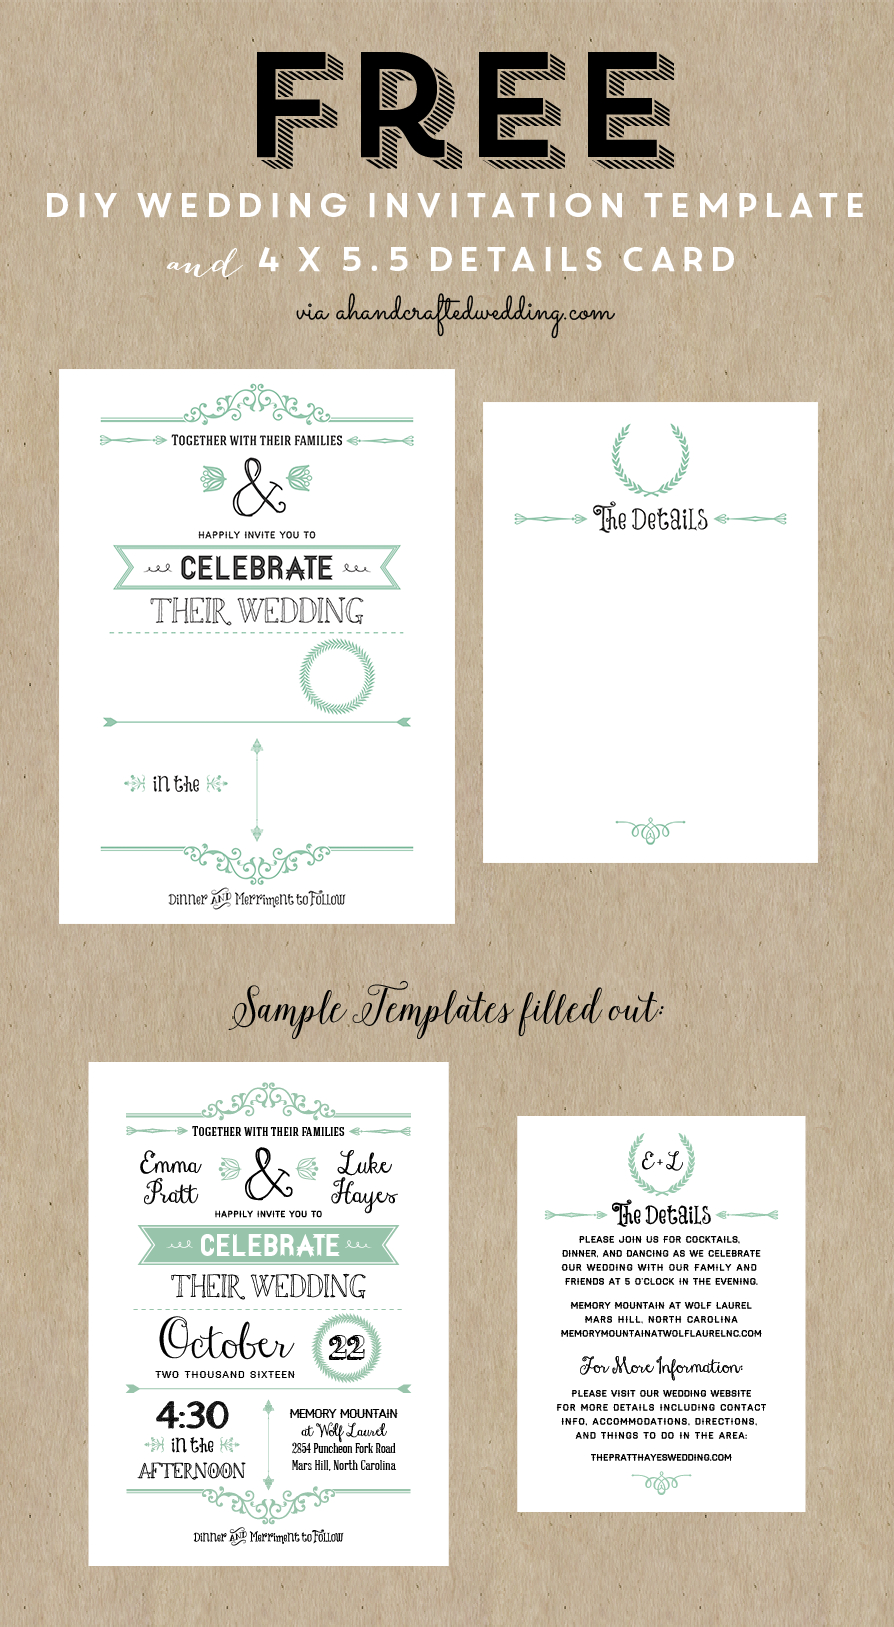 Free Printable Wedding Invitation Template | Wedding | Pinterest - Free Printable Wedding Invitations With Photo